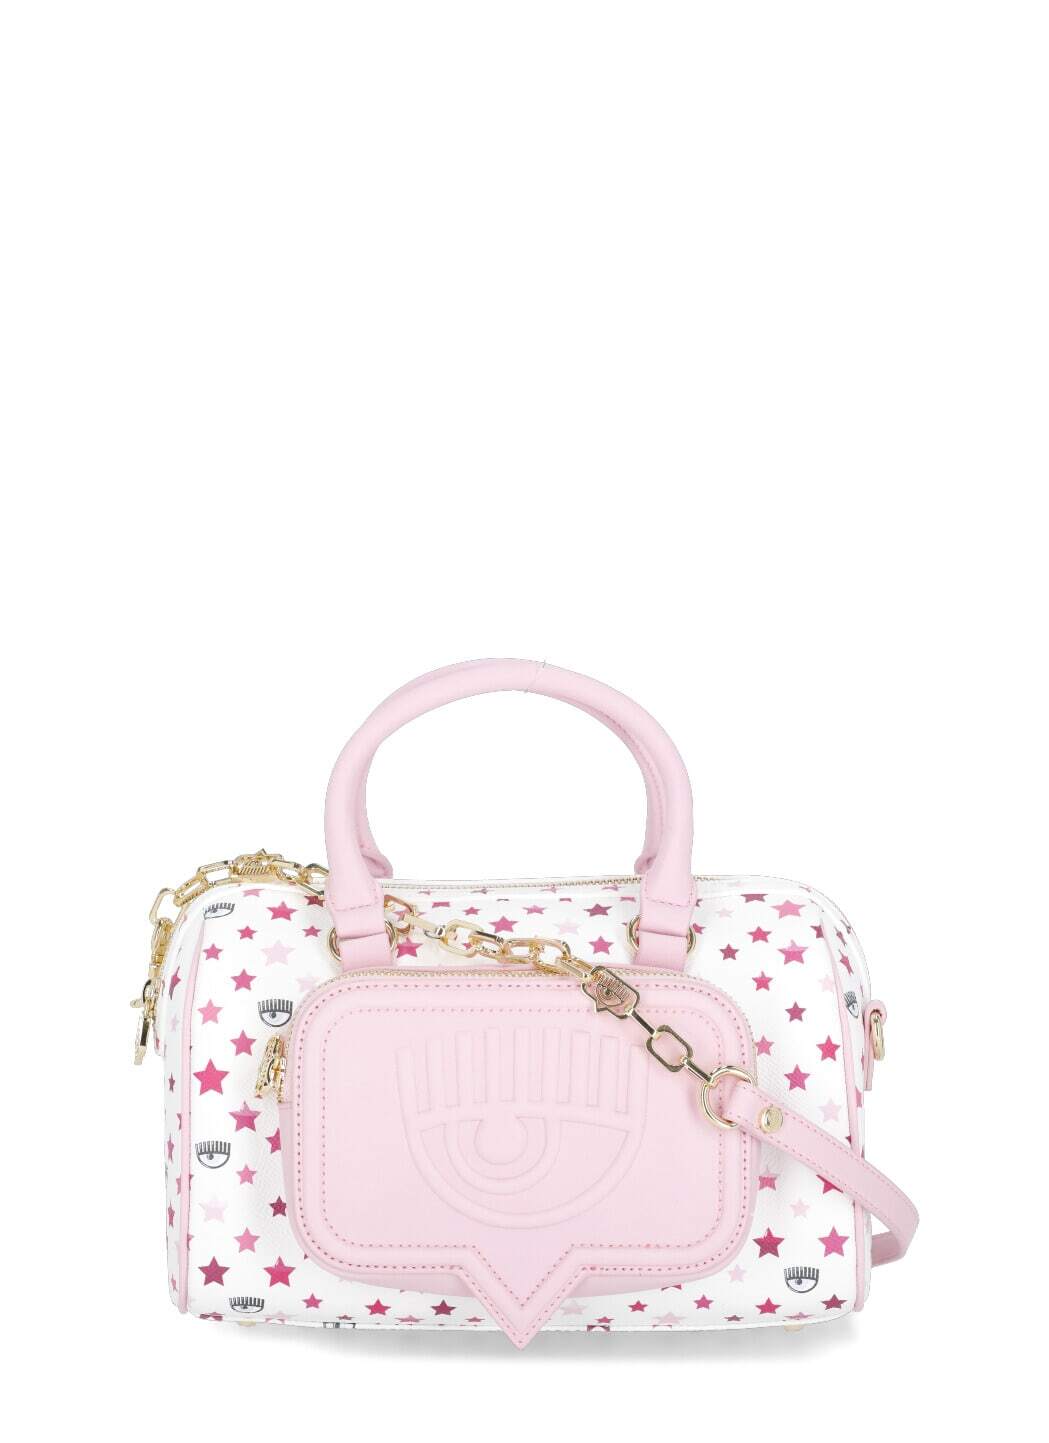 Chiara Ferragni Eye Pocket Bag in pink